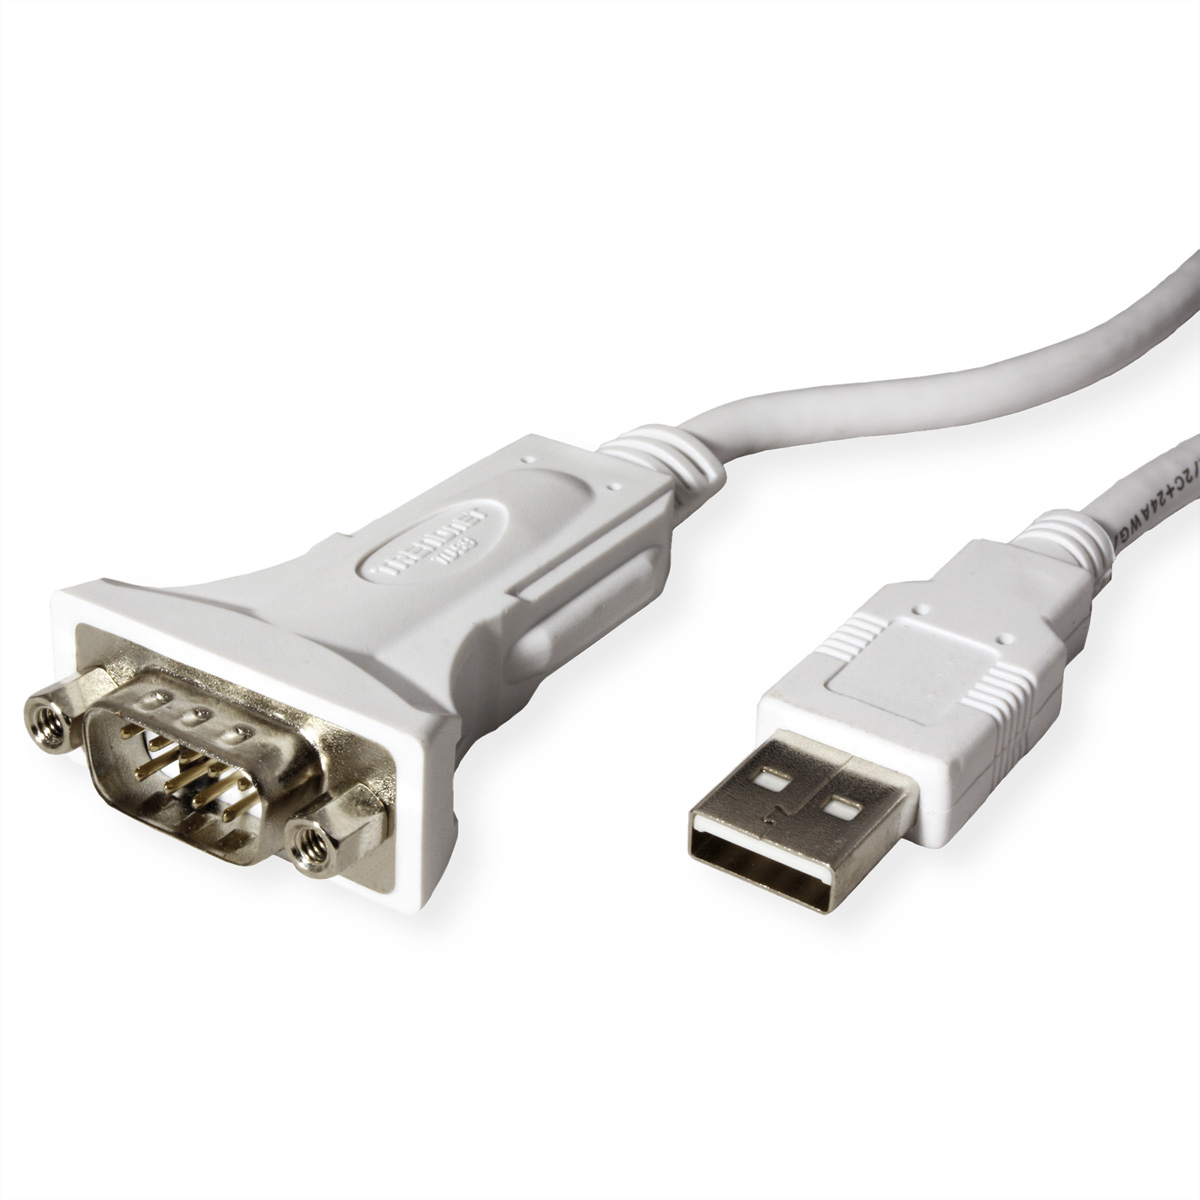 TRENDNET Konverter zu Converter USB Serial USB-zu-Seriell TU-S9